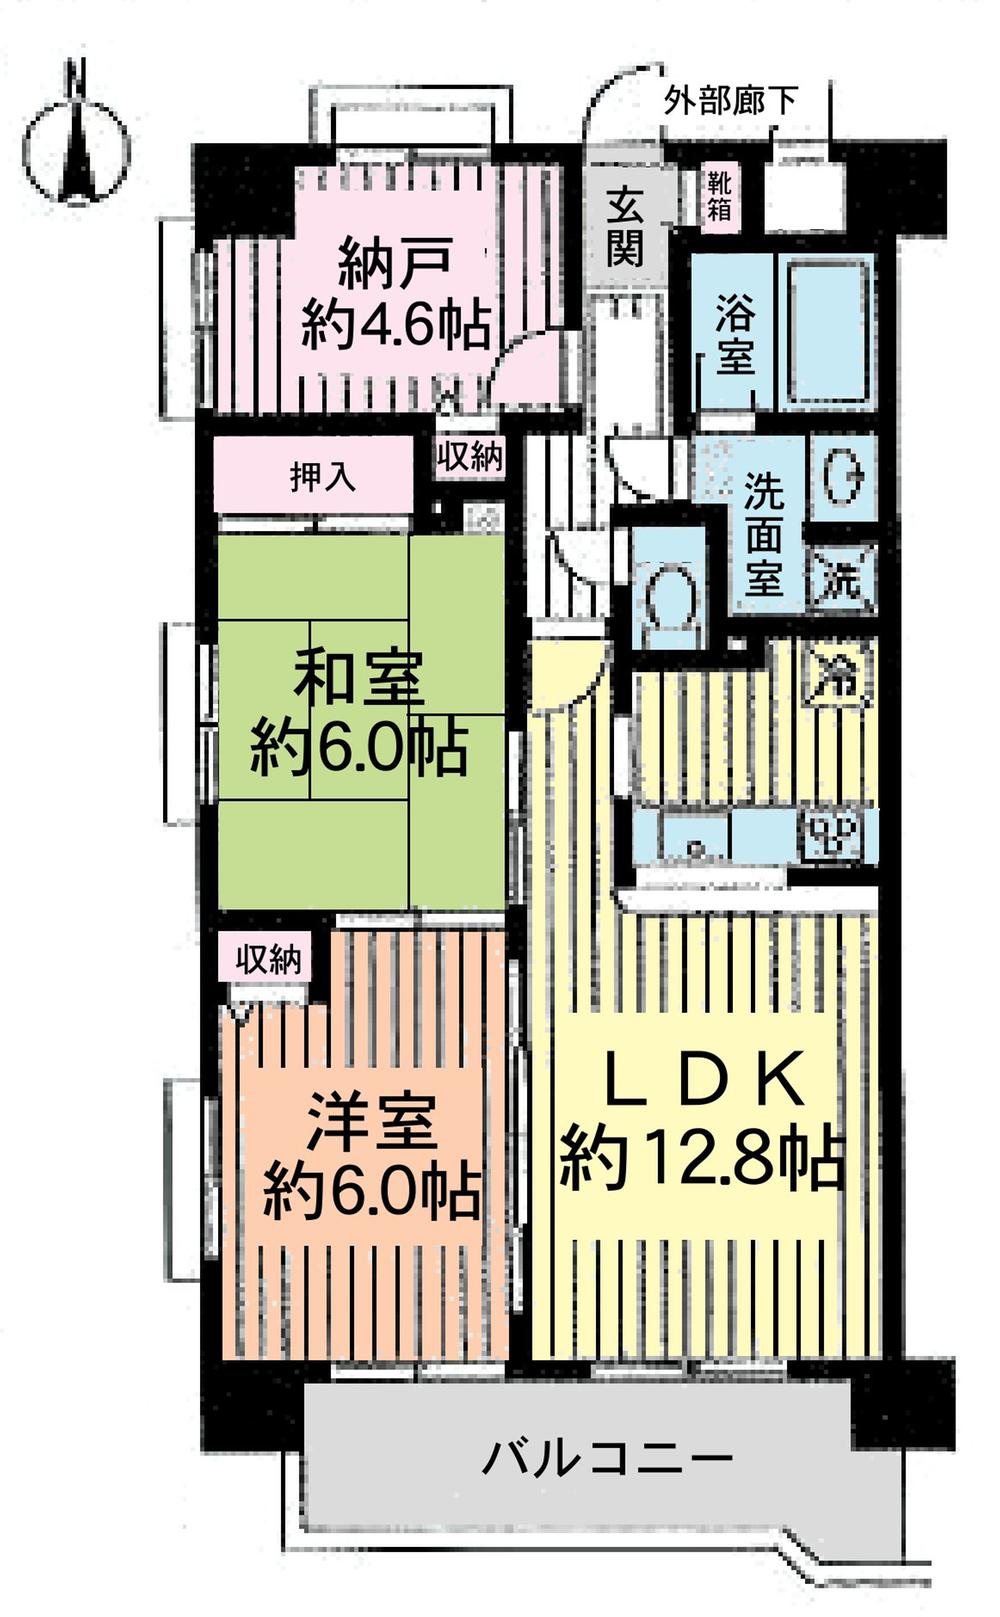 Floor plan. 2LDK + S (storeroom), Price 17.5 million yen, Occupied area 63.07 sq m , Balcony area 7.78 sq m